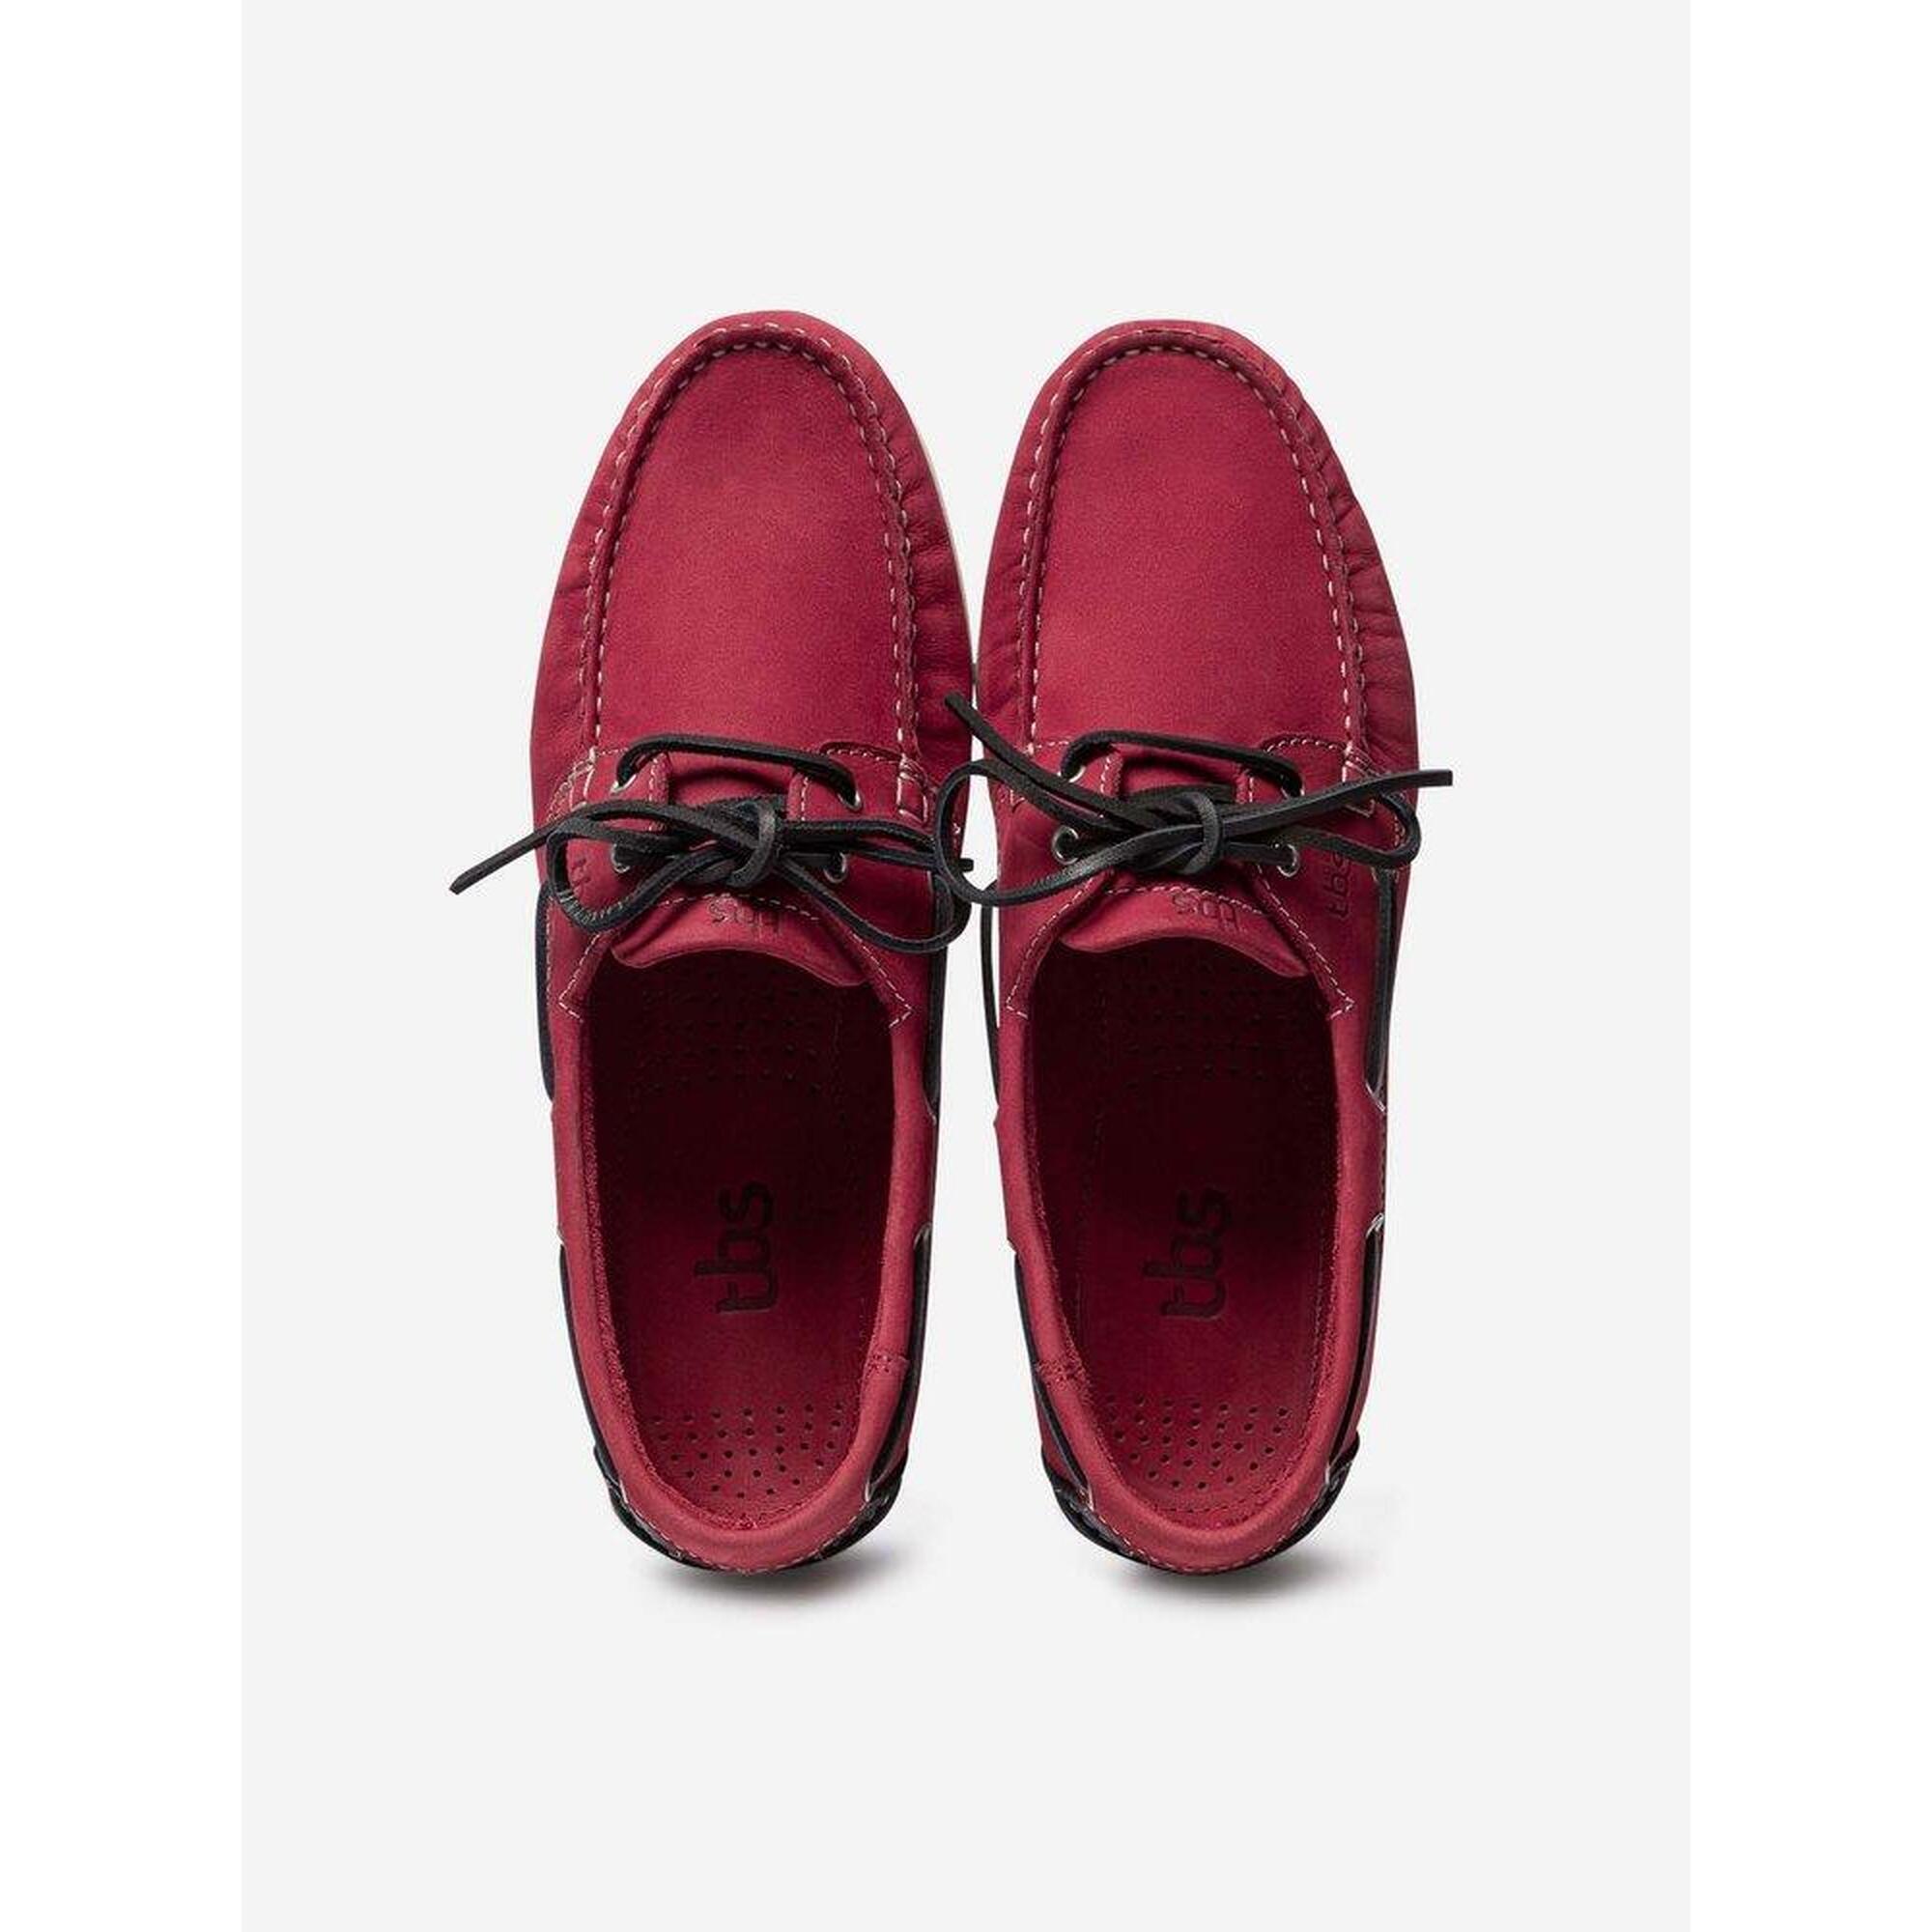 Pantofi pentru navigatie Phenis - rosu barbati